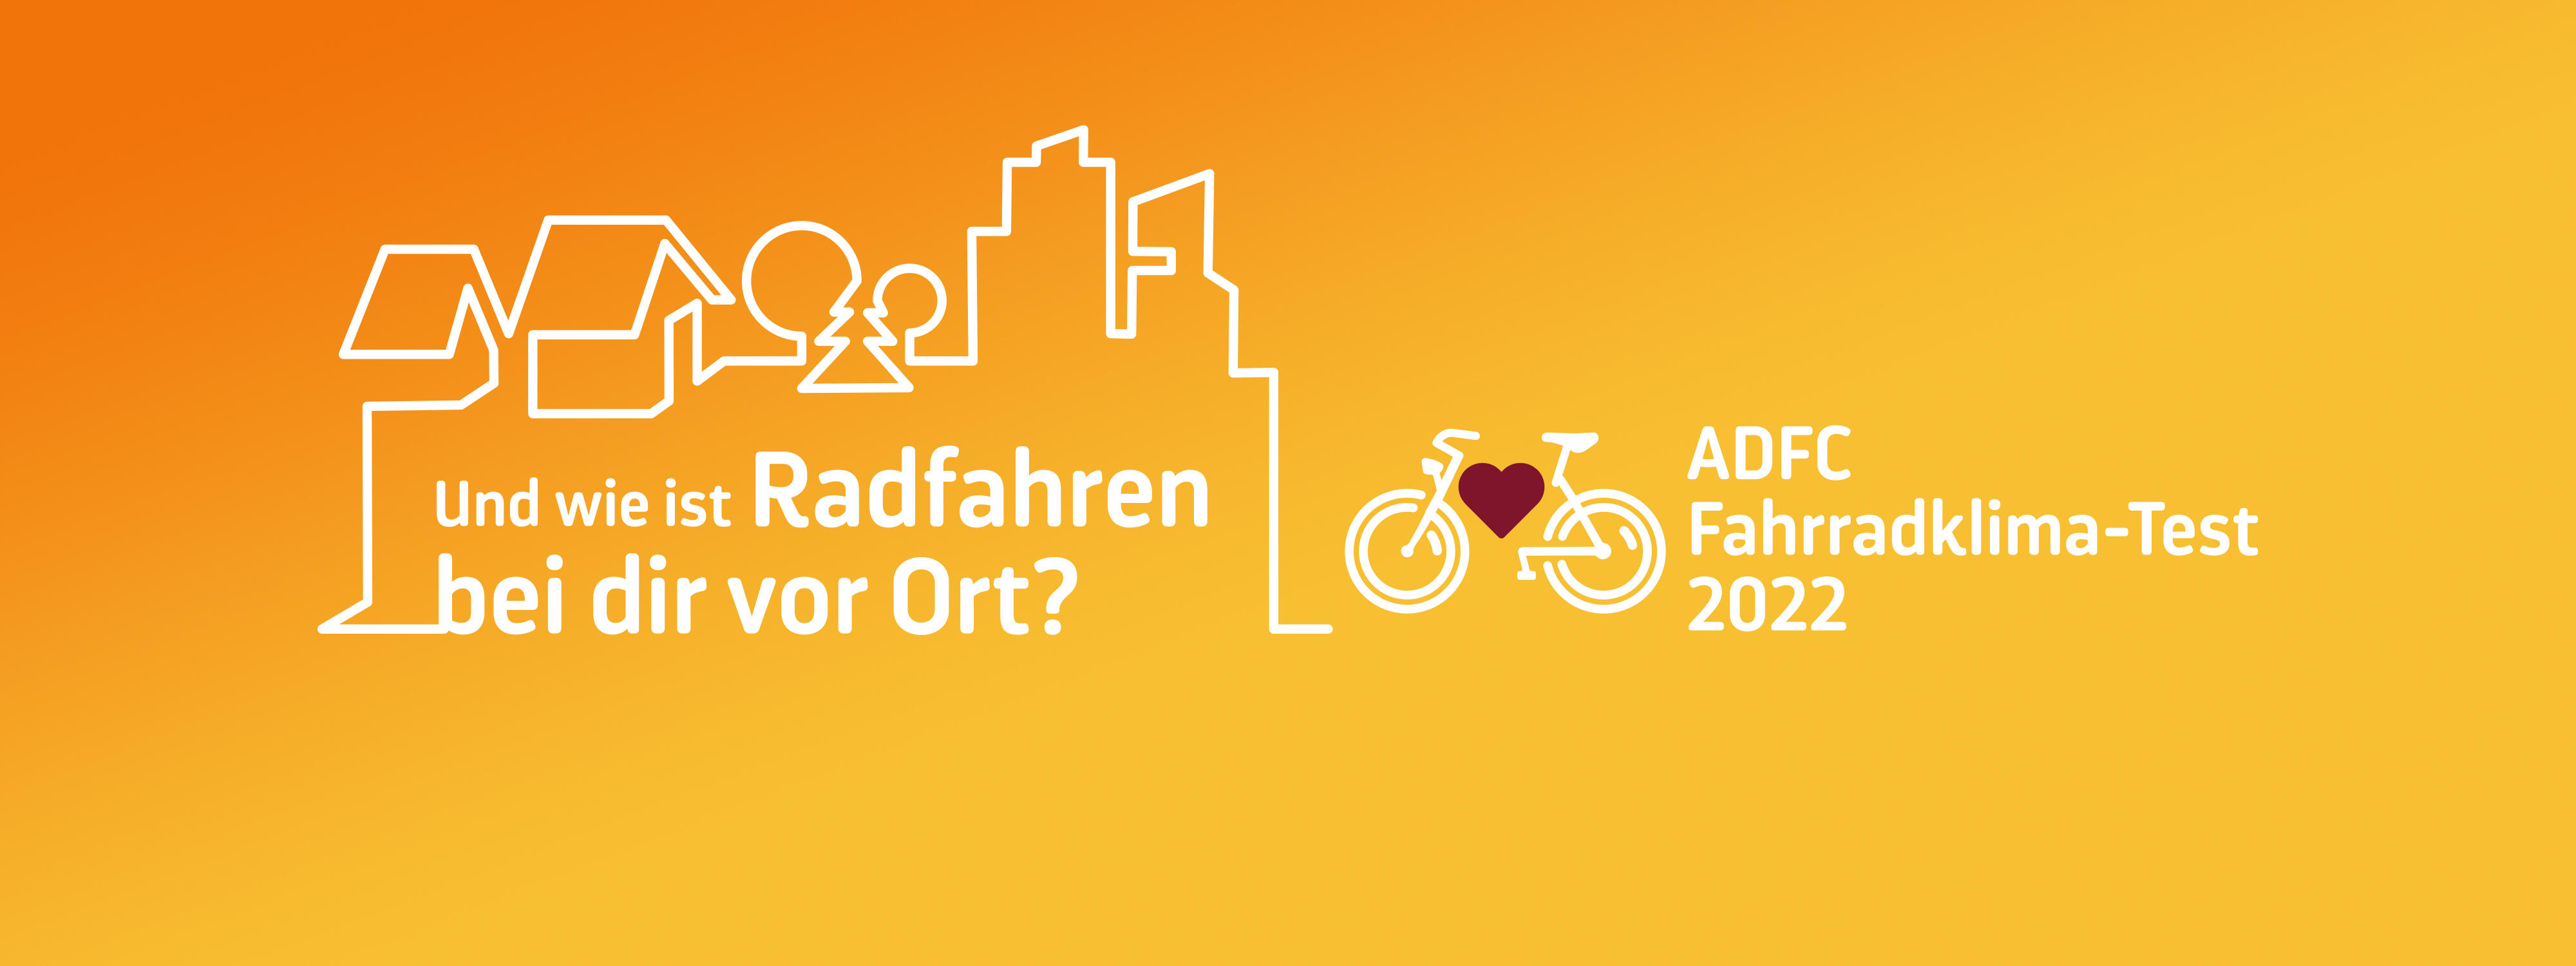 Logo des ADFC Fahrradklima-Tests 2022